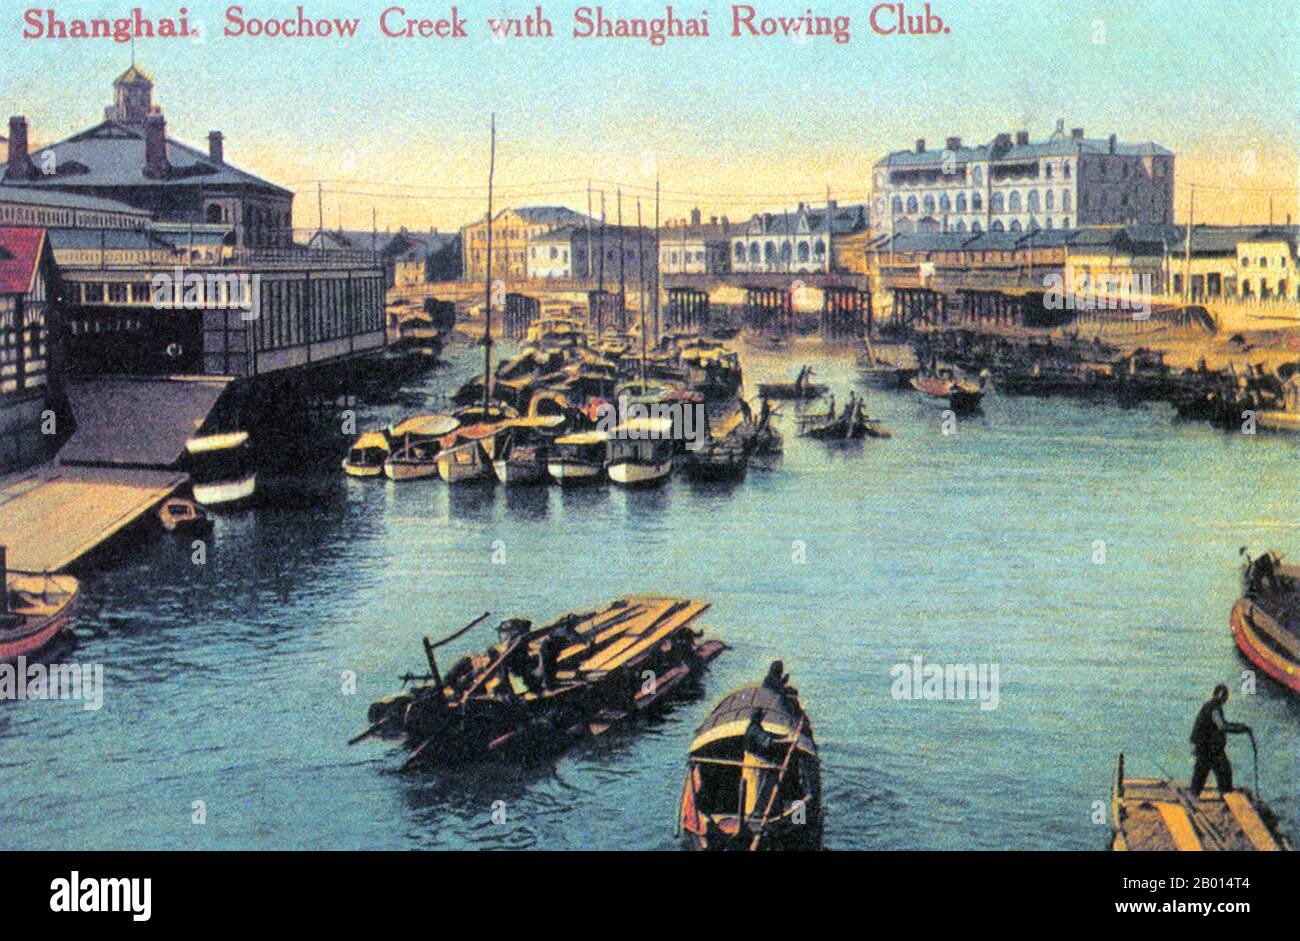 Cina: Shanghai, Suzhou Creek e Shanghai Rowing Club, c.1925. Una cartolina di Suzhou Creek e dello Shanghai Rowing Club, Shanghai, anni '20. Foto Stock